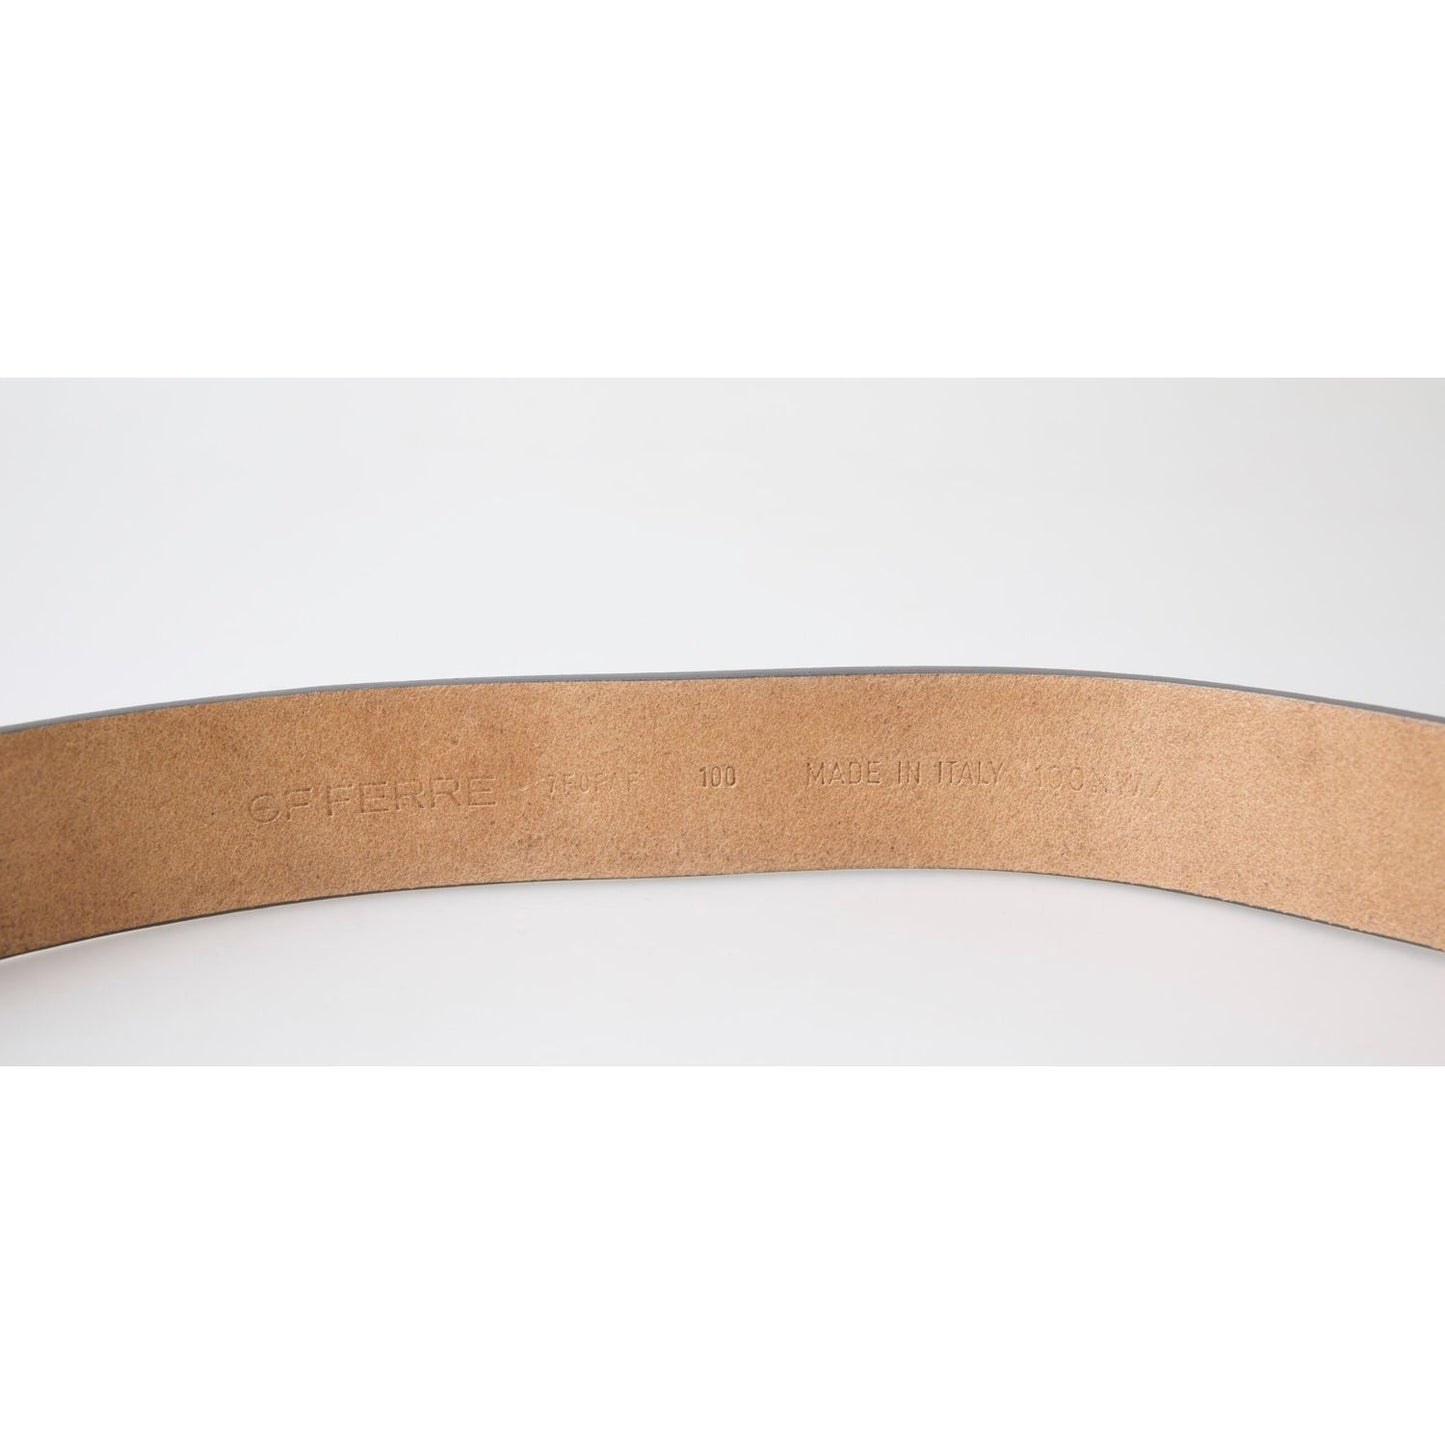 GF Ferre Elegant Leather Fashion Belt with Engraved Buckle brown-leather-fashion-logo-buckle-waist-belt 465A0846-copy-scaled-69f4854e-412.jpg